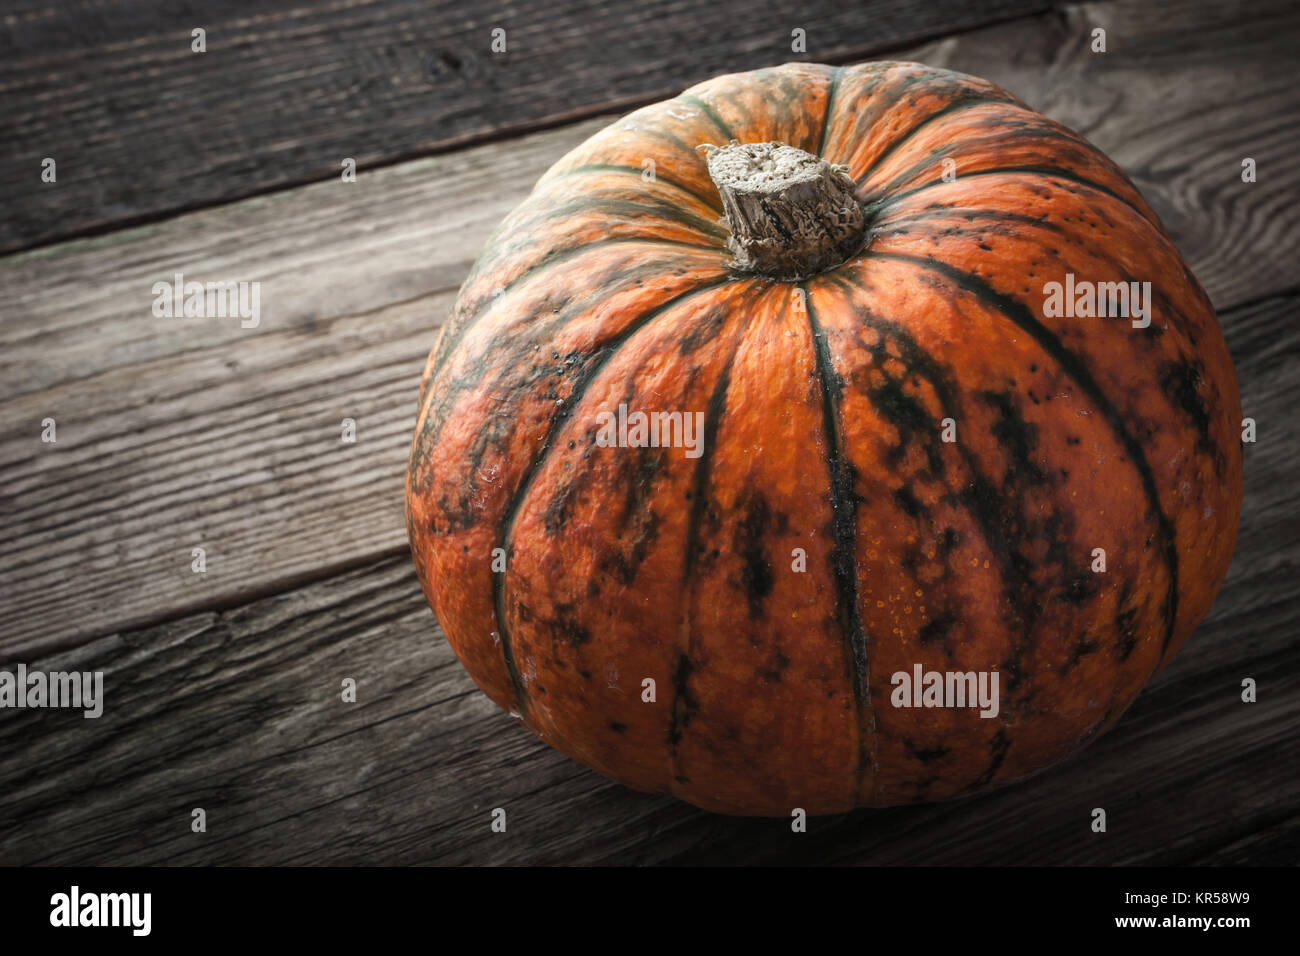 Orange pumpkin with green stripes on the wooden table horizontal Stock Photo